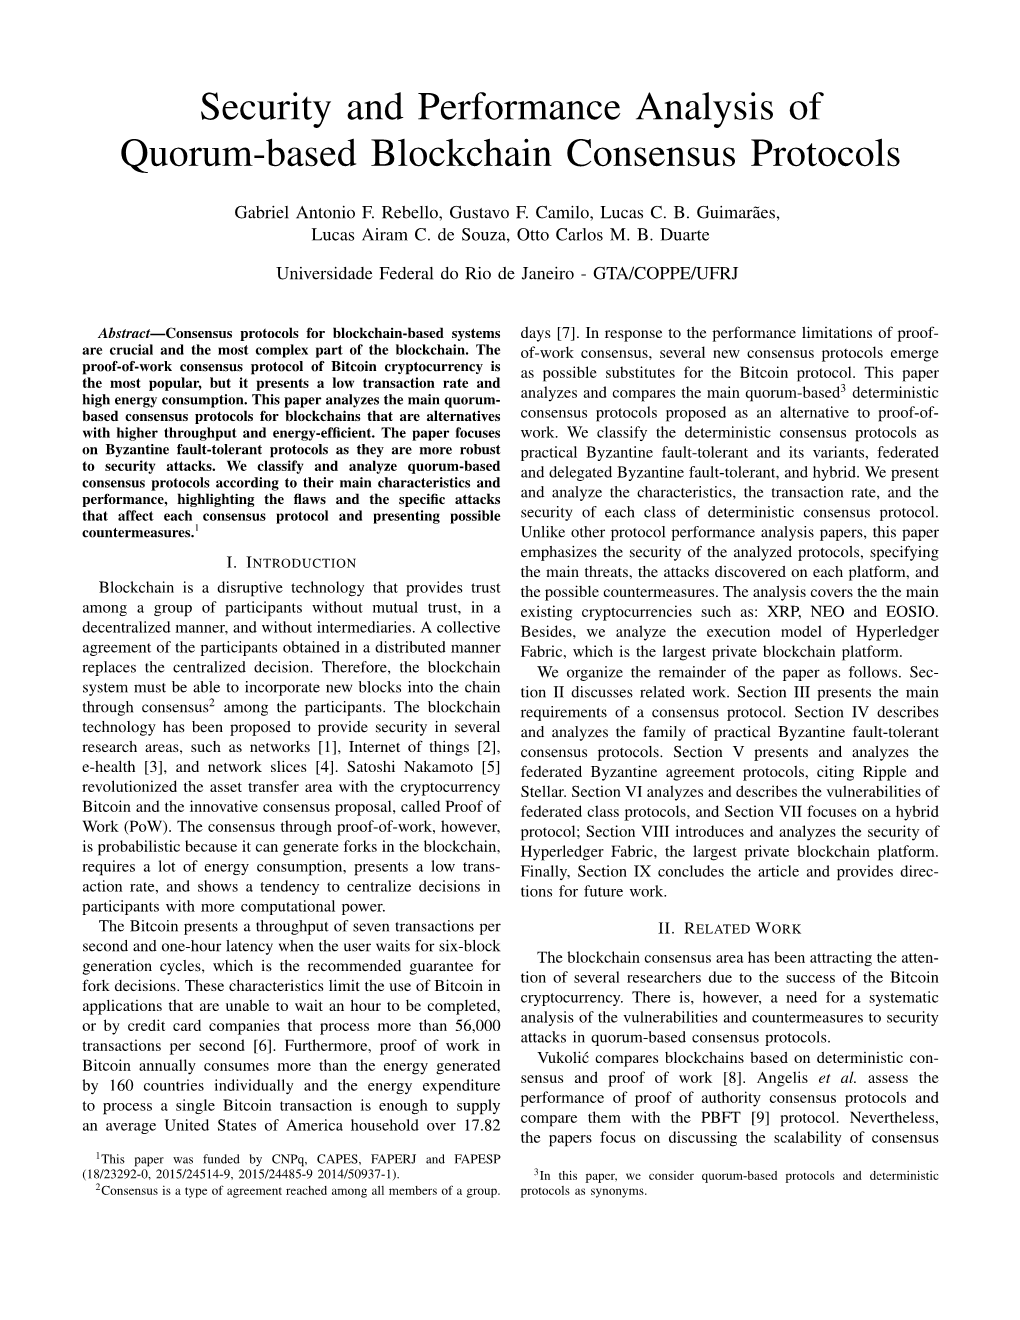 Security and Performance Analysis of Quorum-Based Blockchain Consensus Protocols